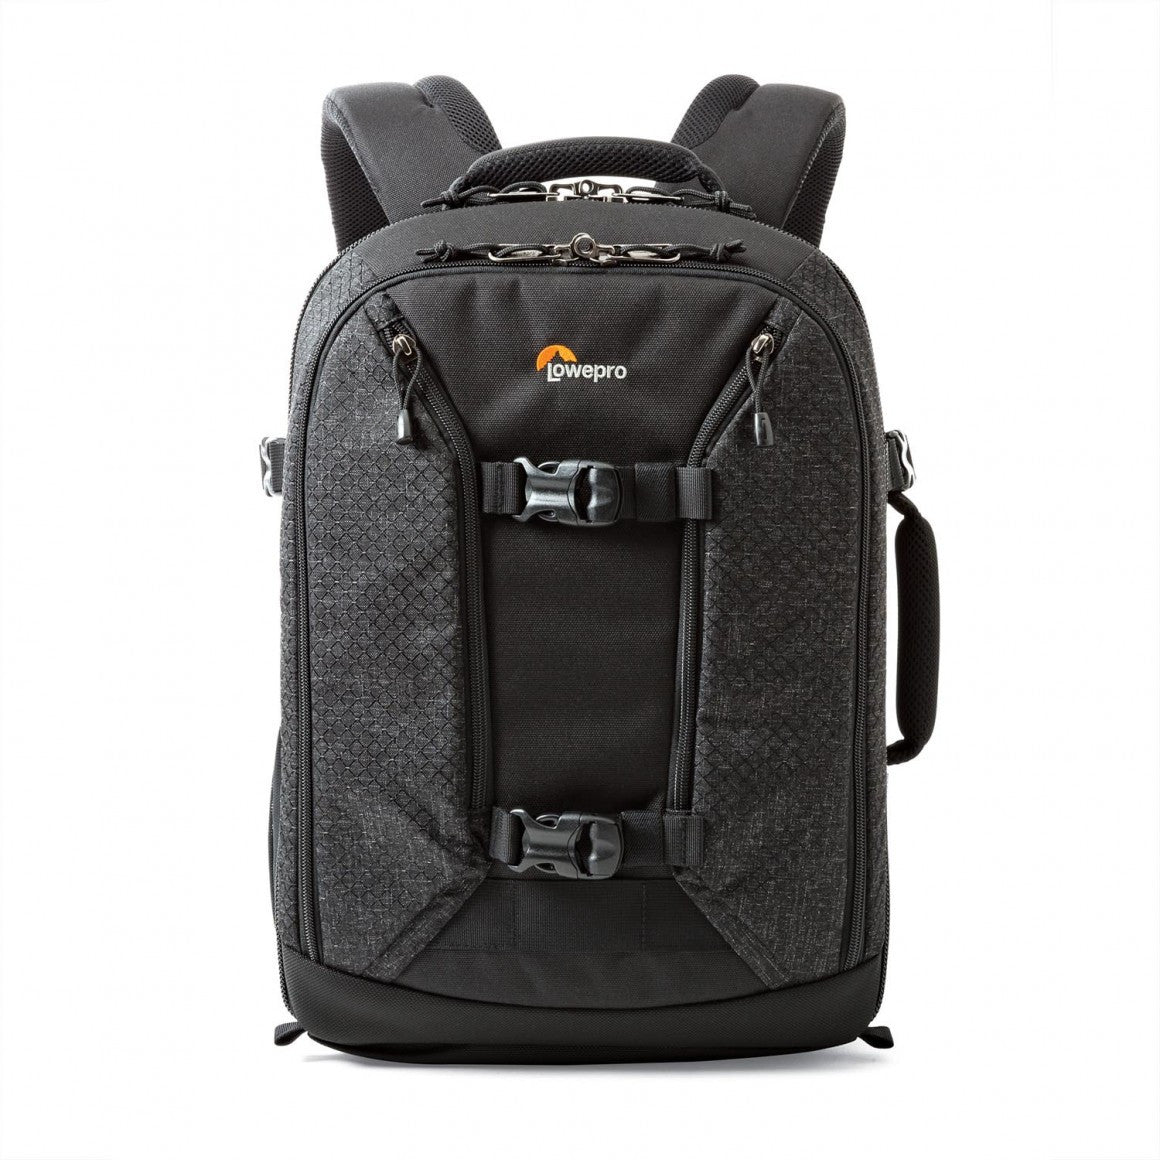 Lowepro Pro Runner 350 AW II Backpack (Black), bags backpacks, Lowepro - Pictureline  - 1